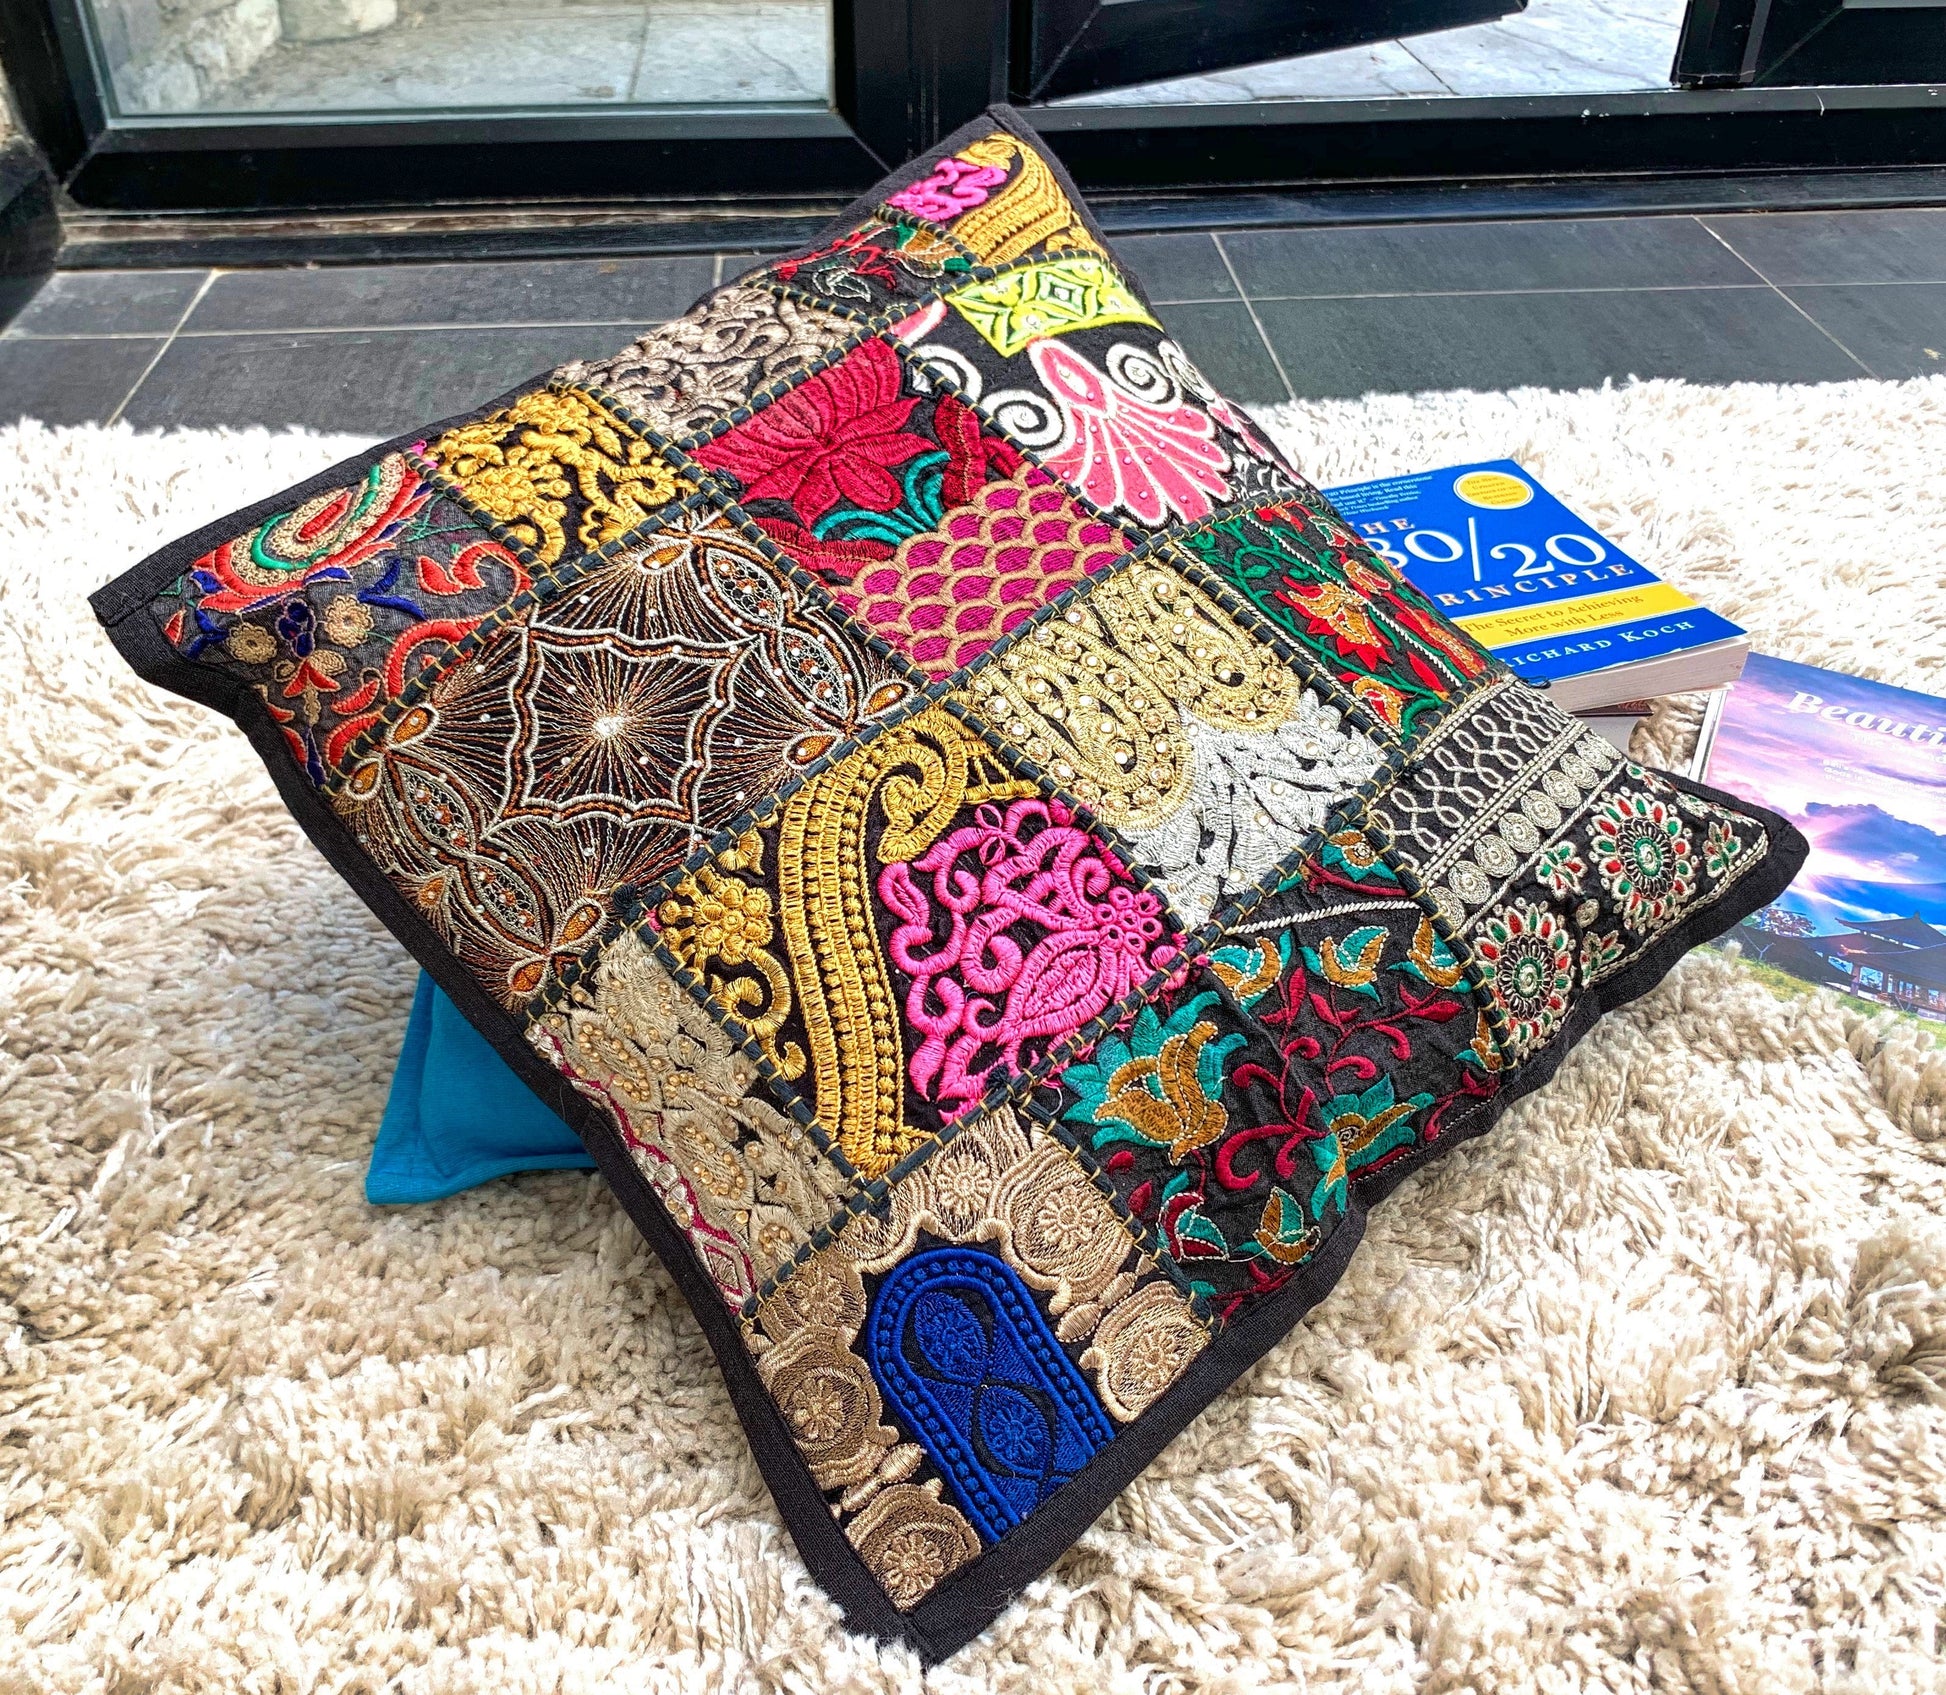 Vintage Sari Patchwork Cushion Covers - Perfect Black - 41x41cm - Stylla London